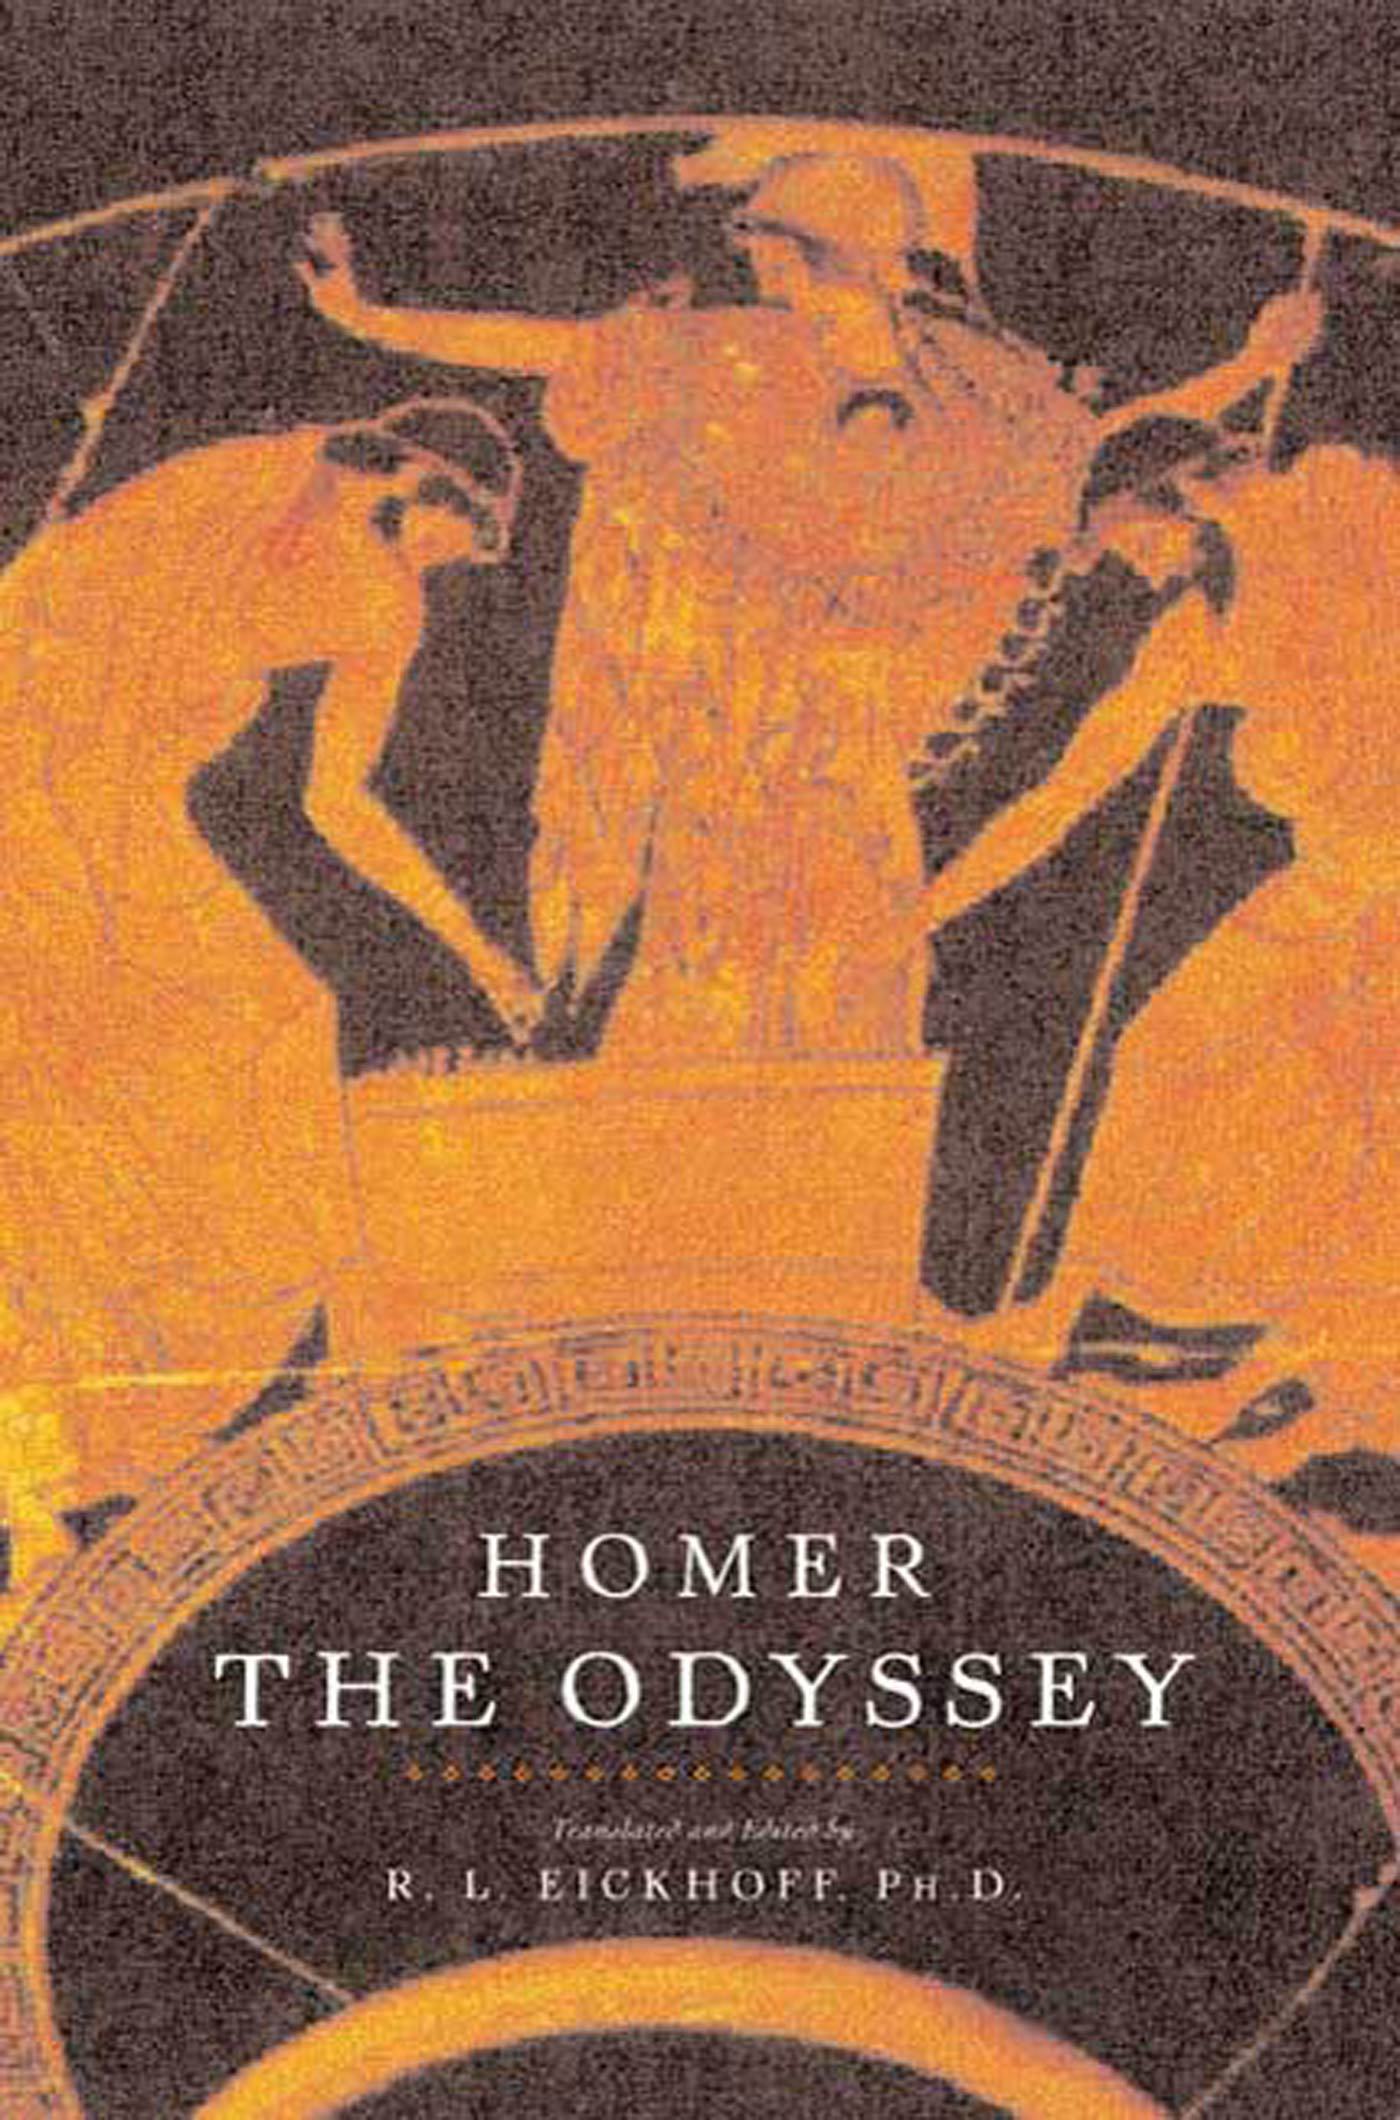 The Odyssey by R. L. Eickhoff, Homer